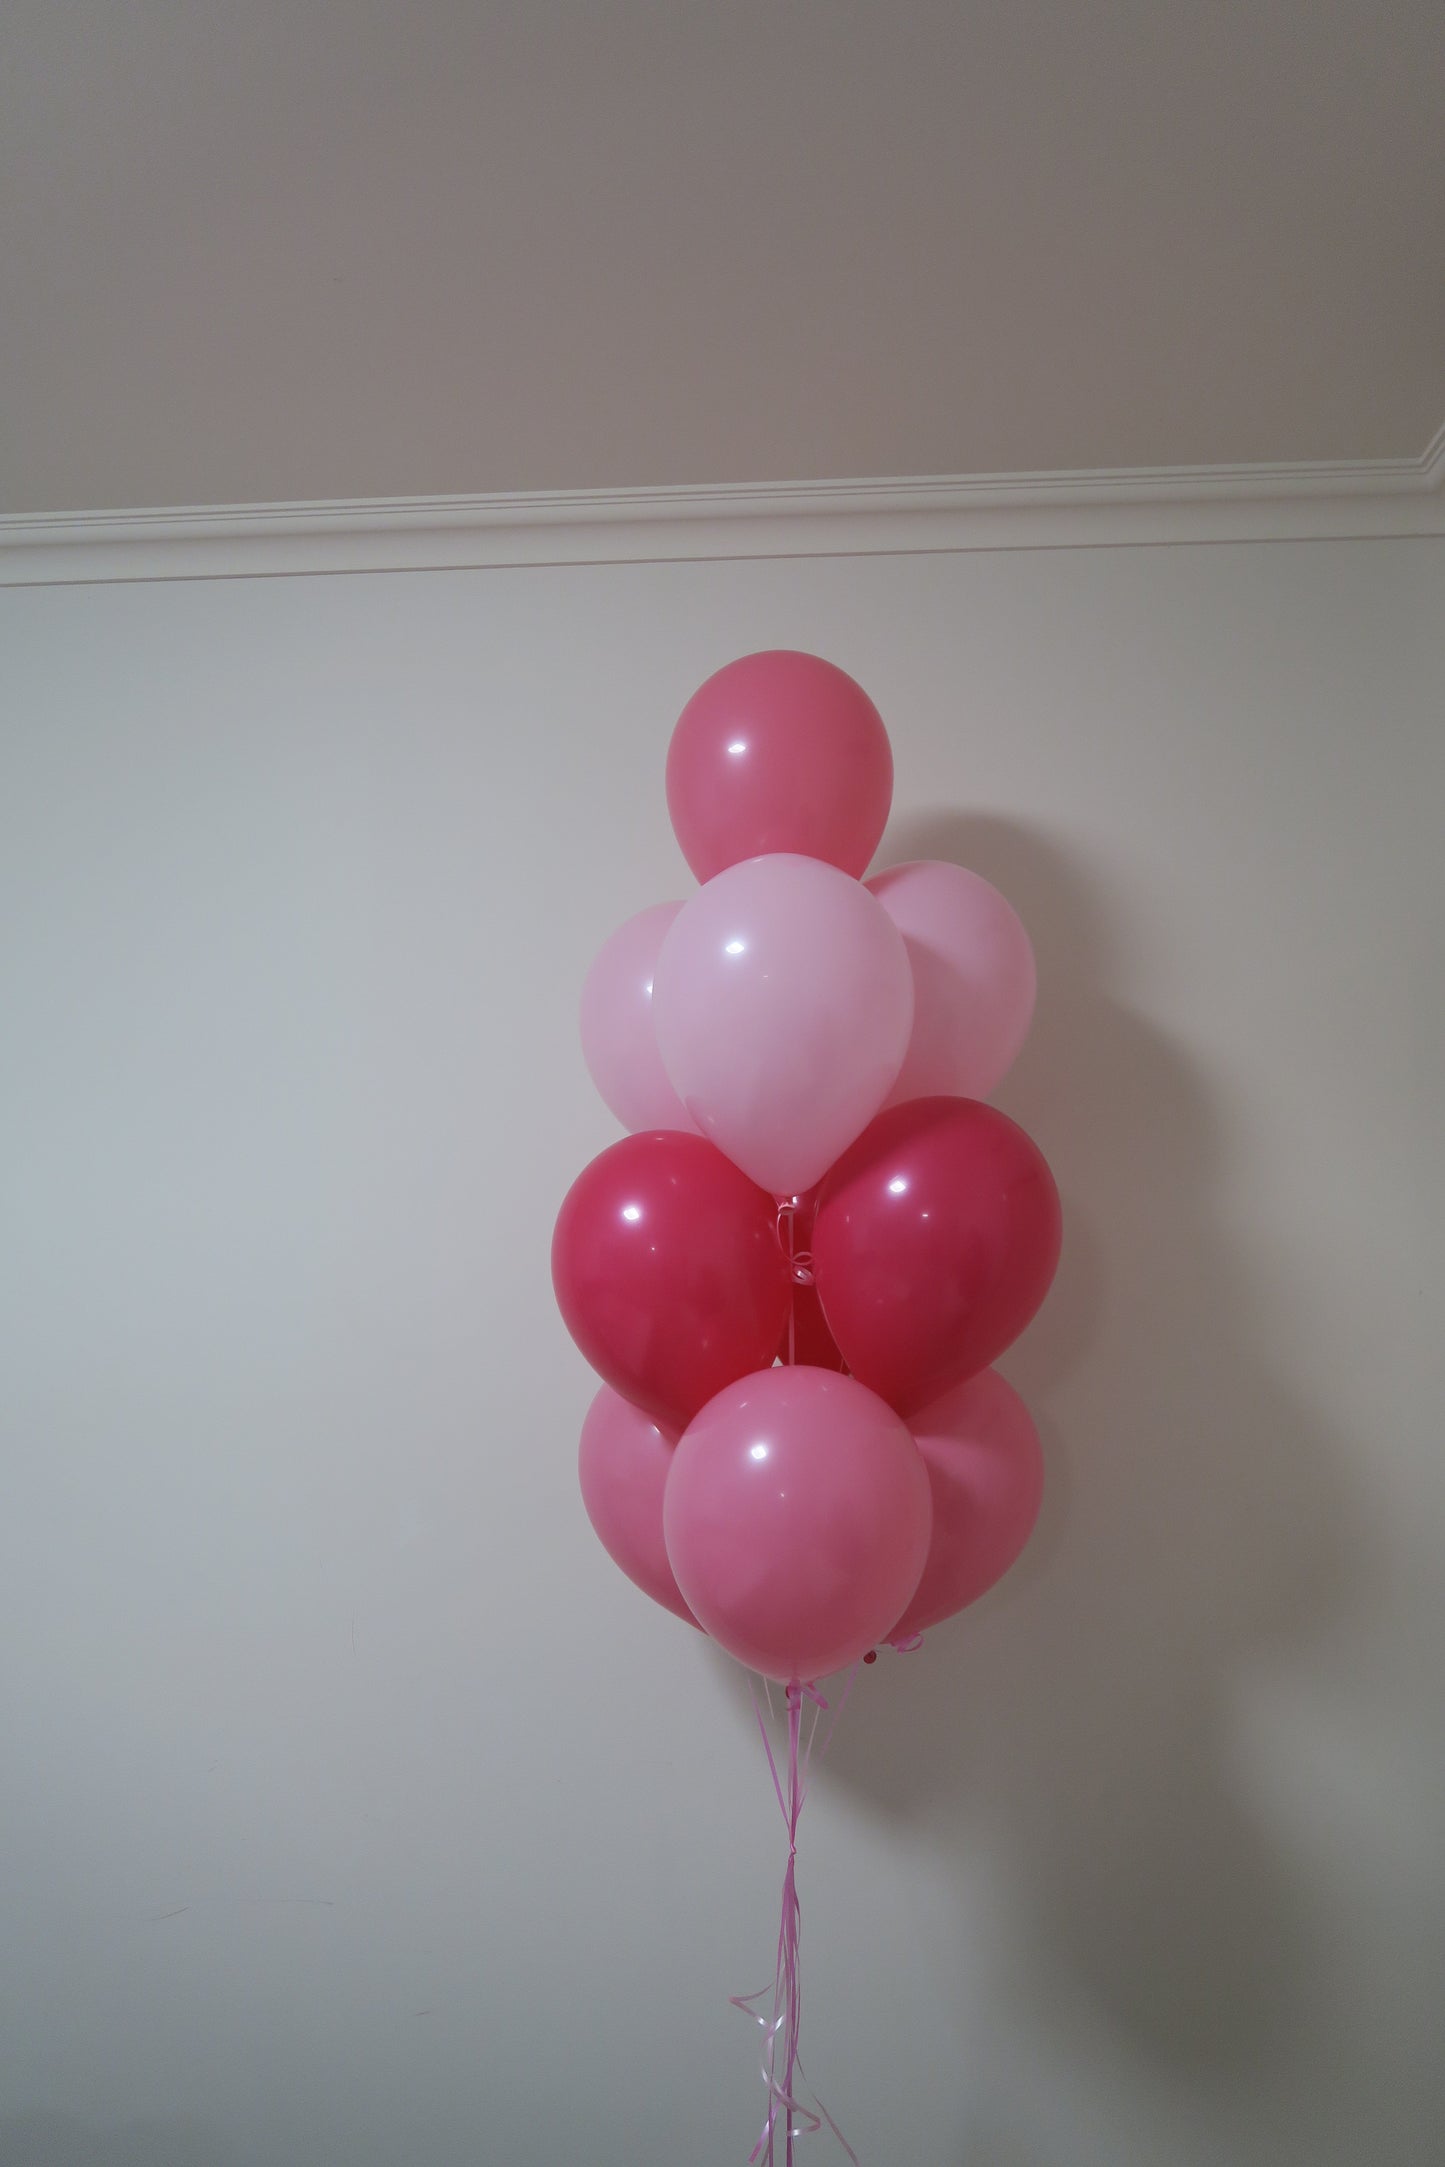 Princess 18inch Foil helium Balloon bouquet